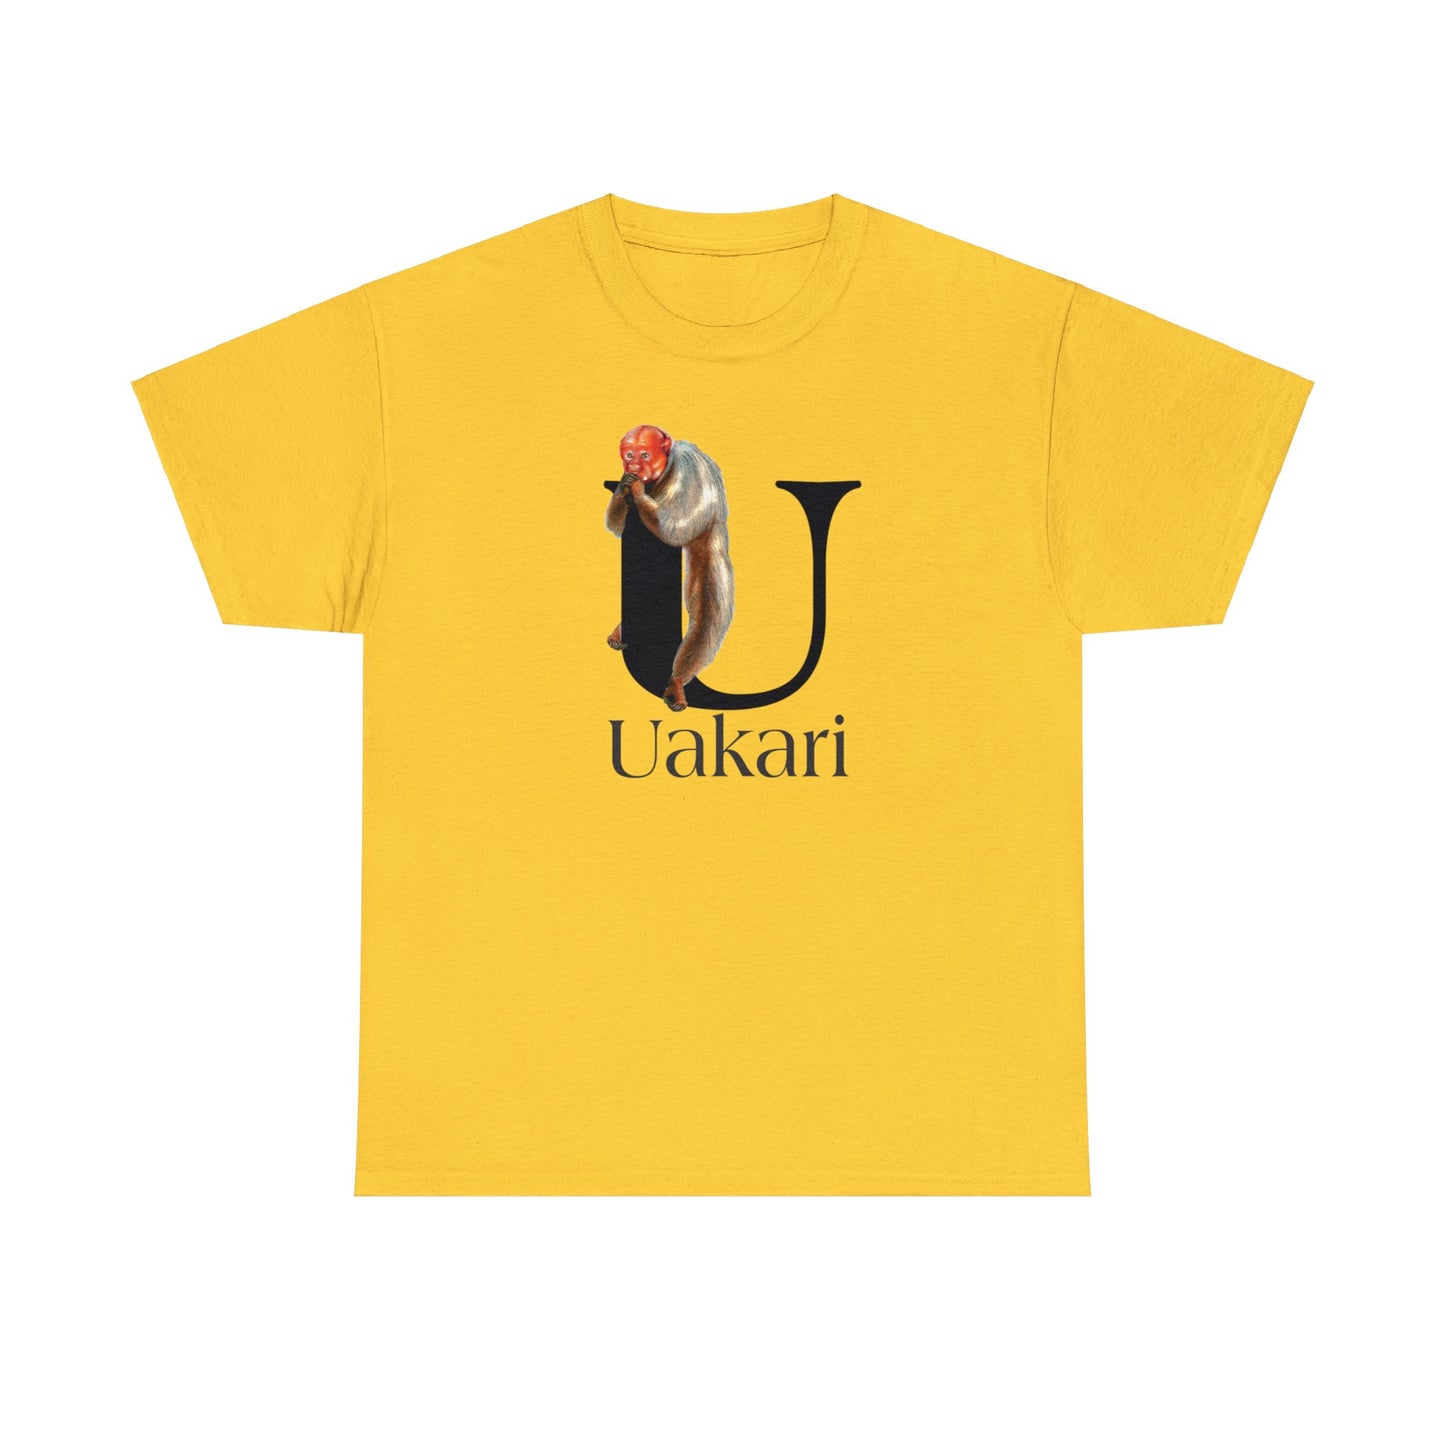 U is for Uakari Monkey, Uacari monkey Drawing, Uakari T-Shirt, animal t-shirt, animal